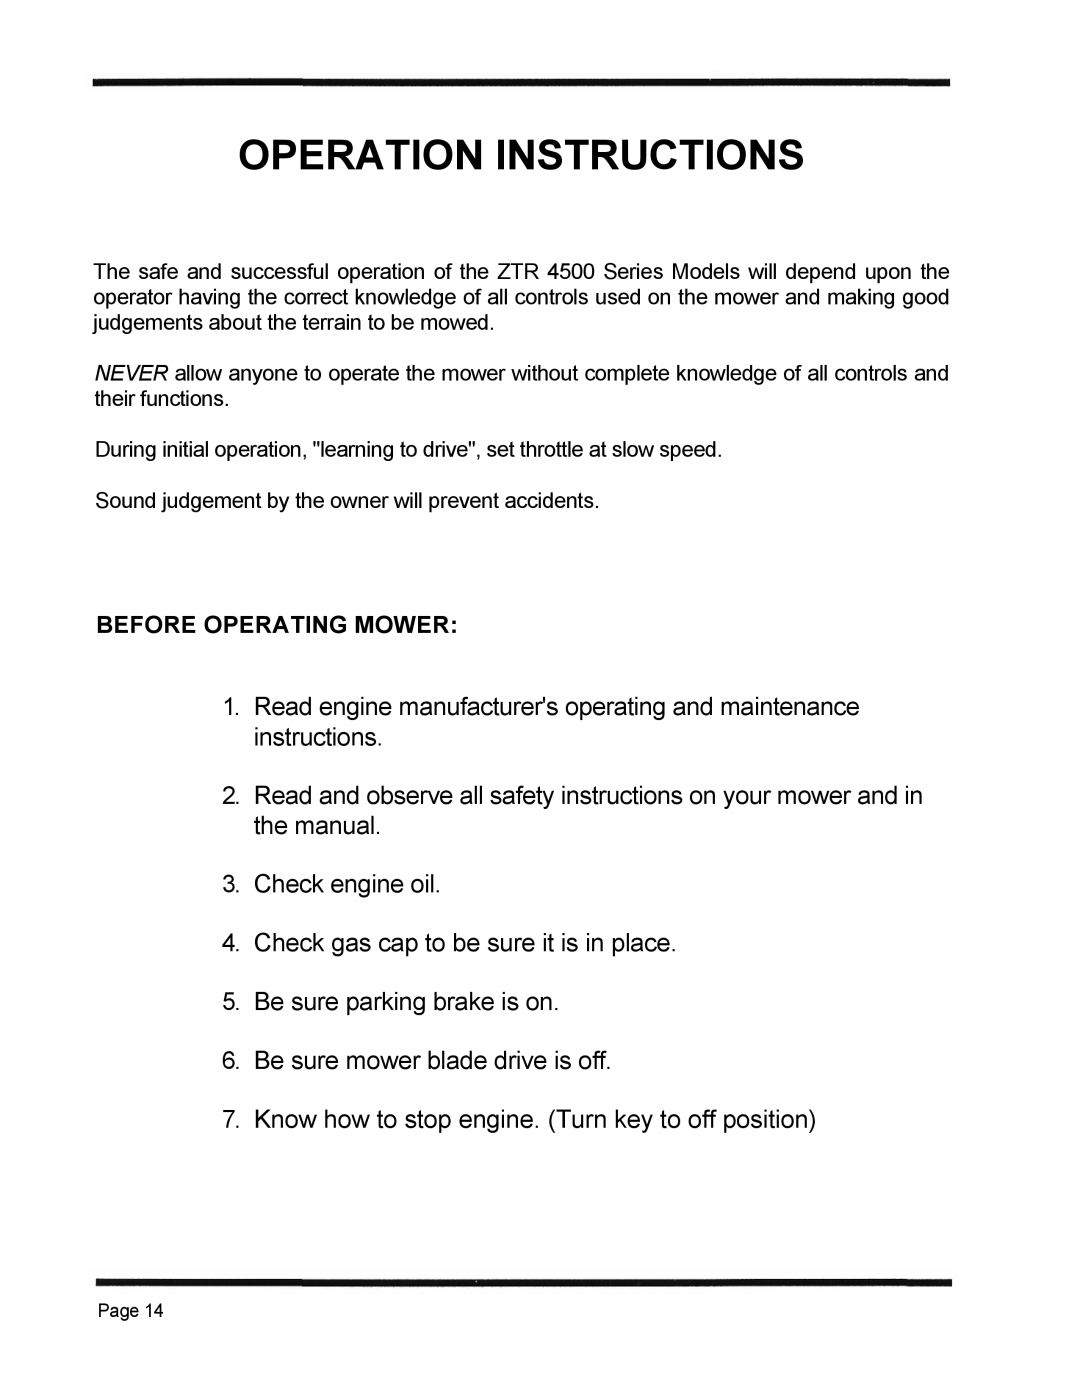 Dixon 4500 Series manual Operation Instructions 